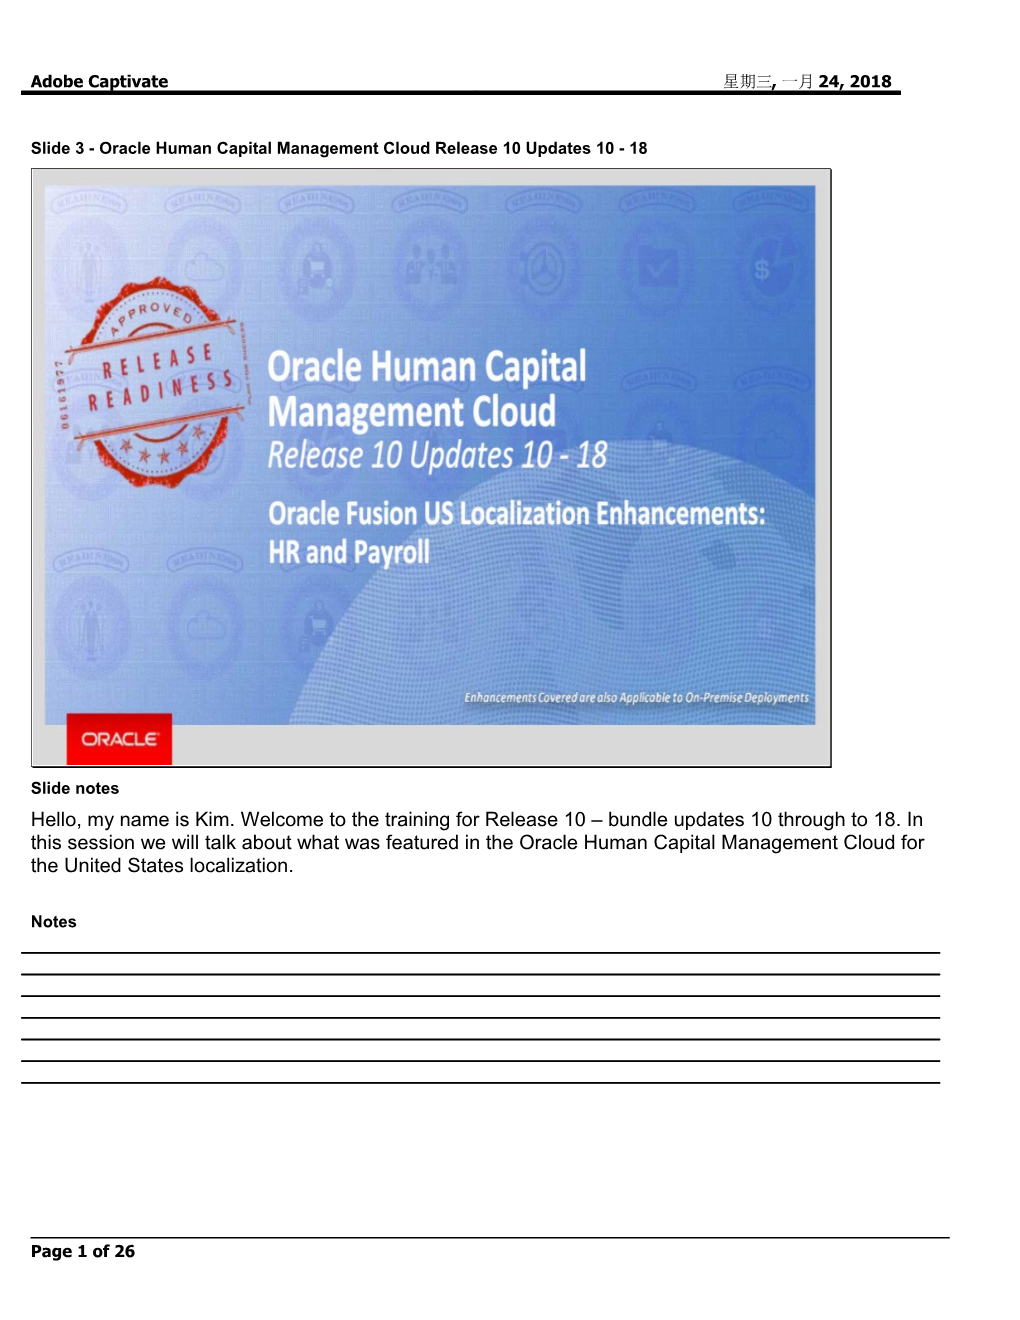 Slide 3 - Oracle Human Capital Management Cloud Release 10 Updates 10 - 18